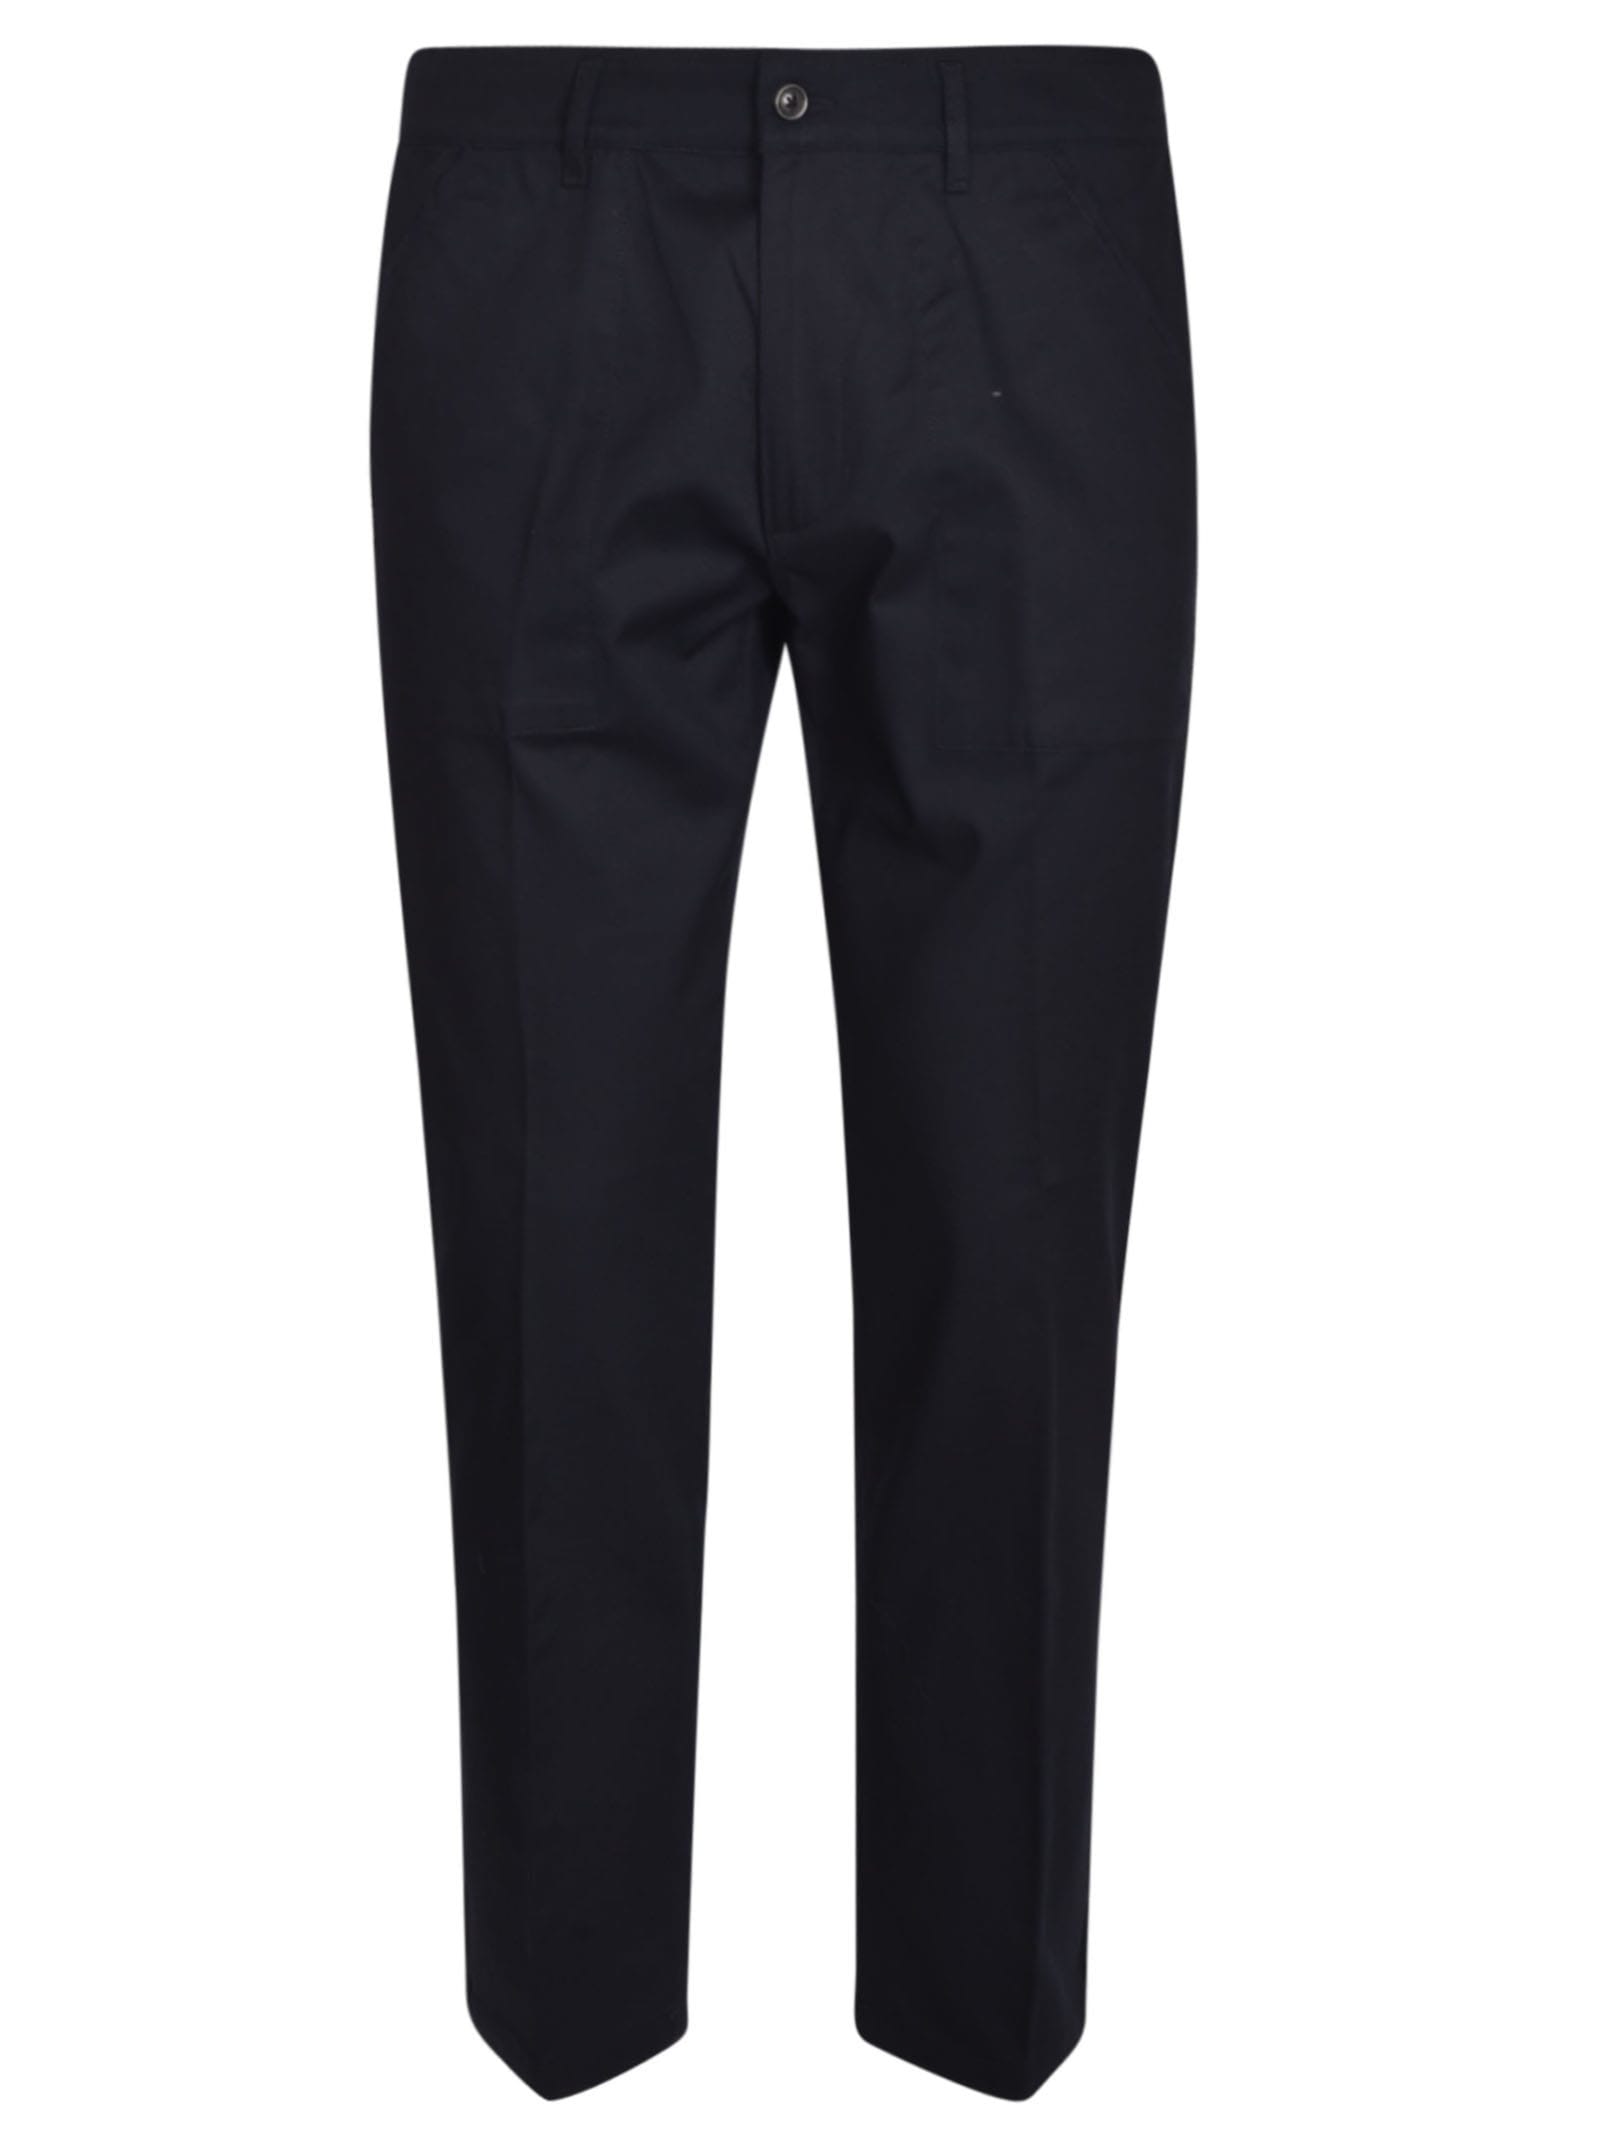 MAURO GRIFONI trousers,GI40012/29 582